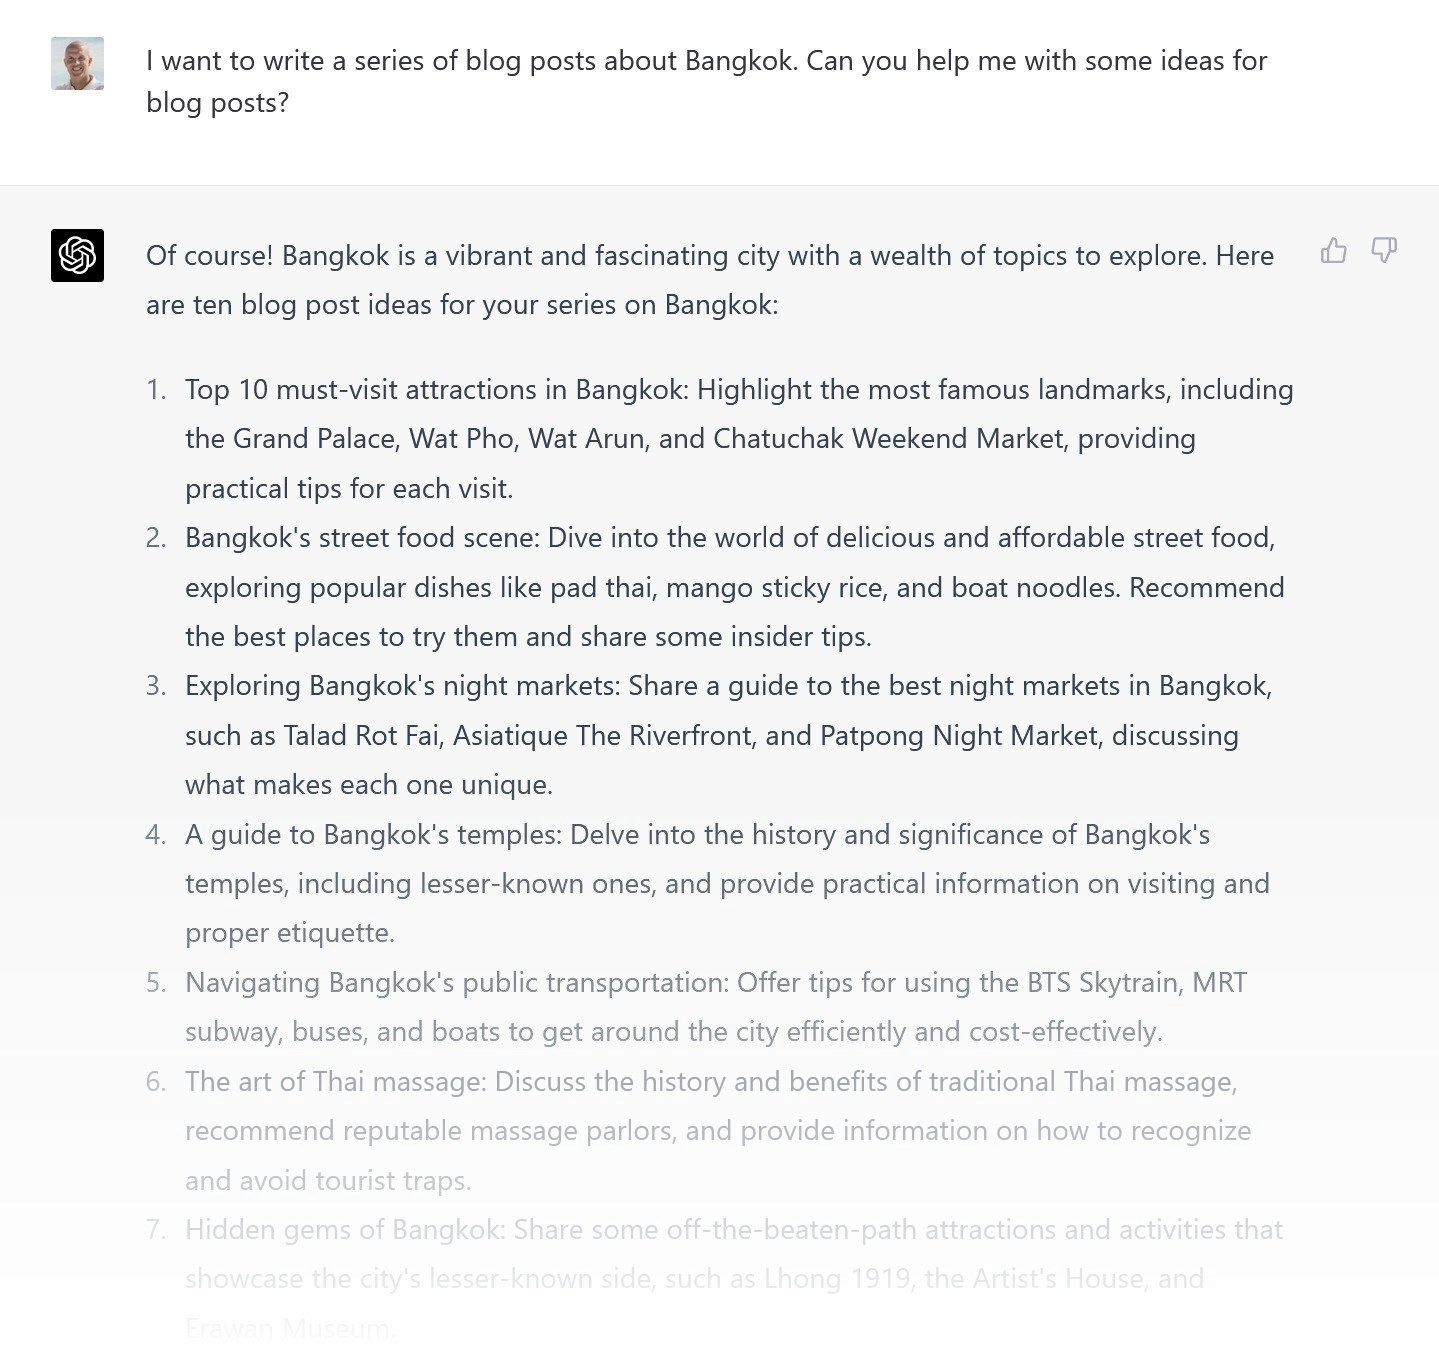 Prompting ChatGPT for ideas on blog posts for Bangkok